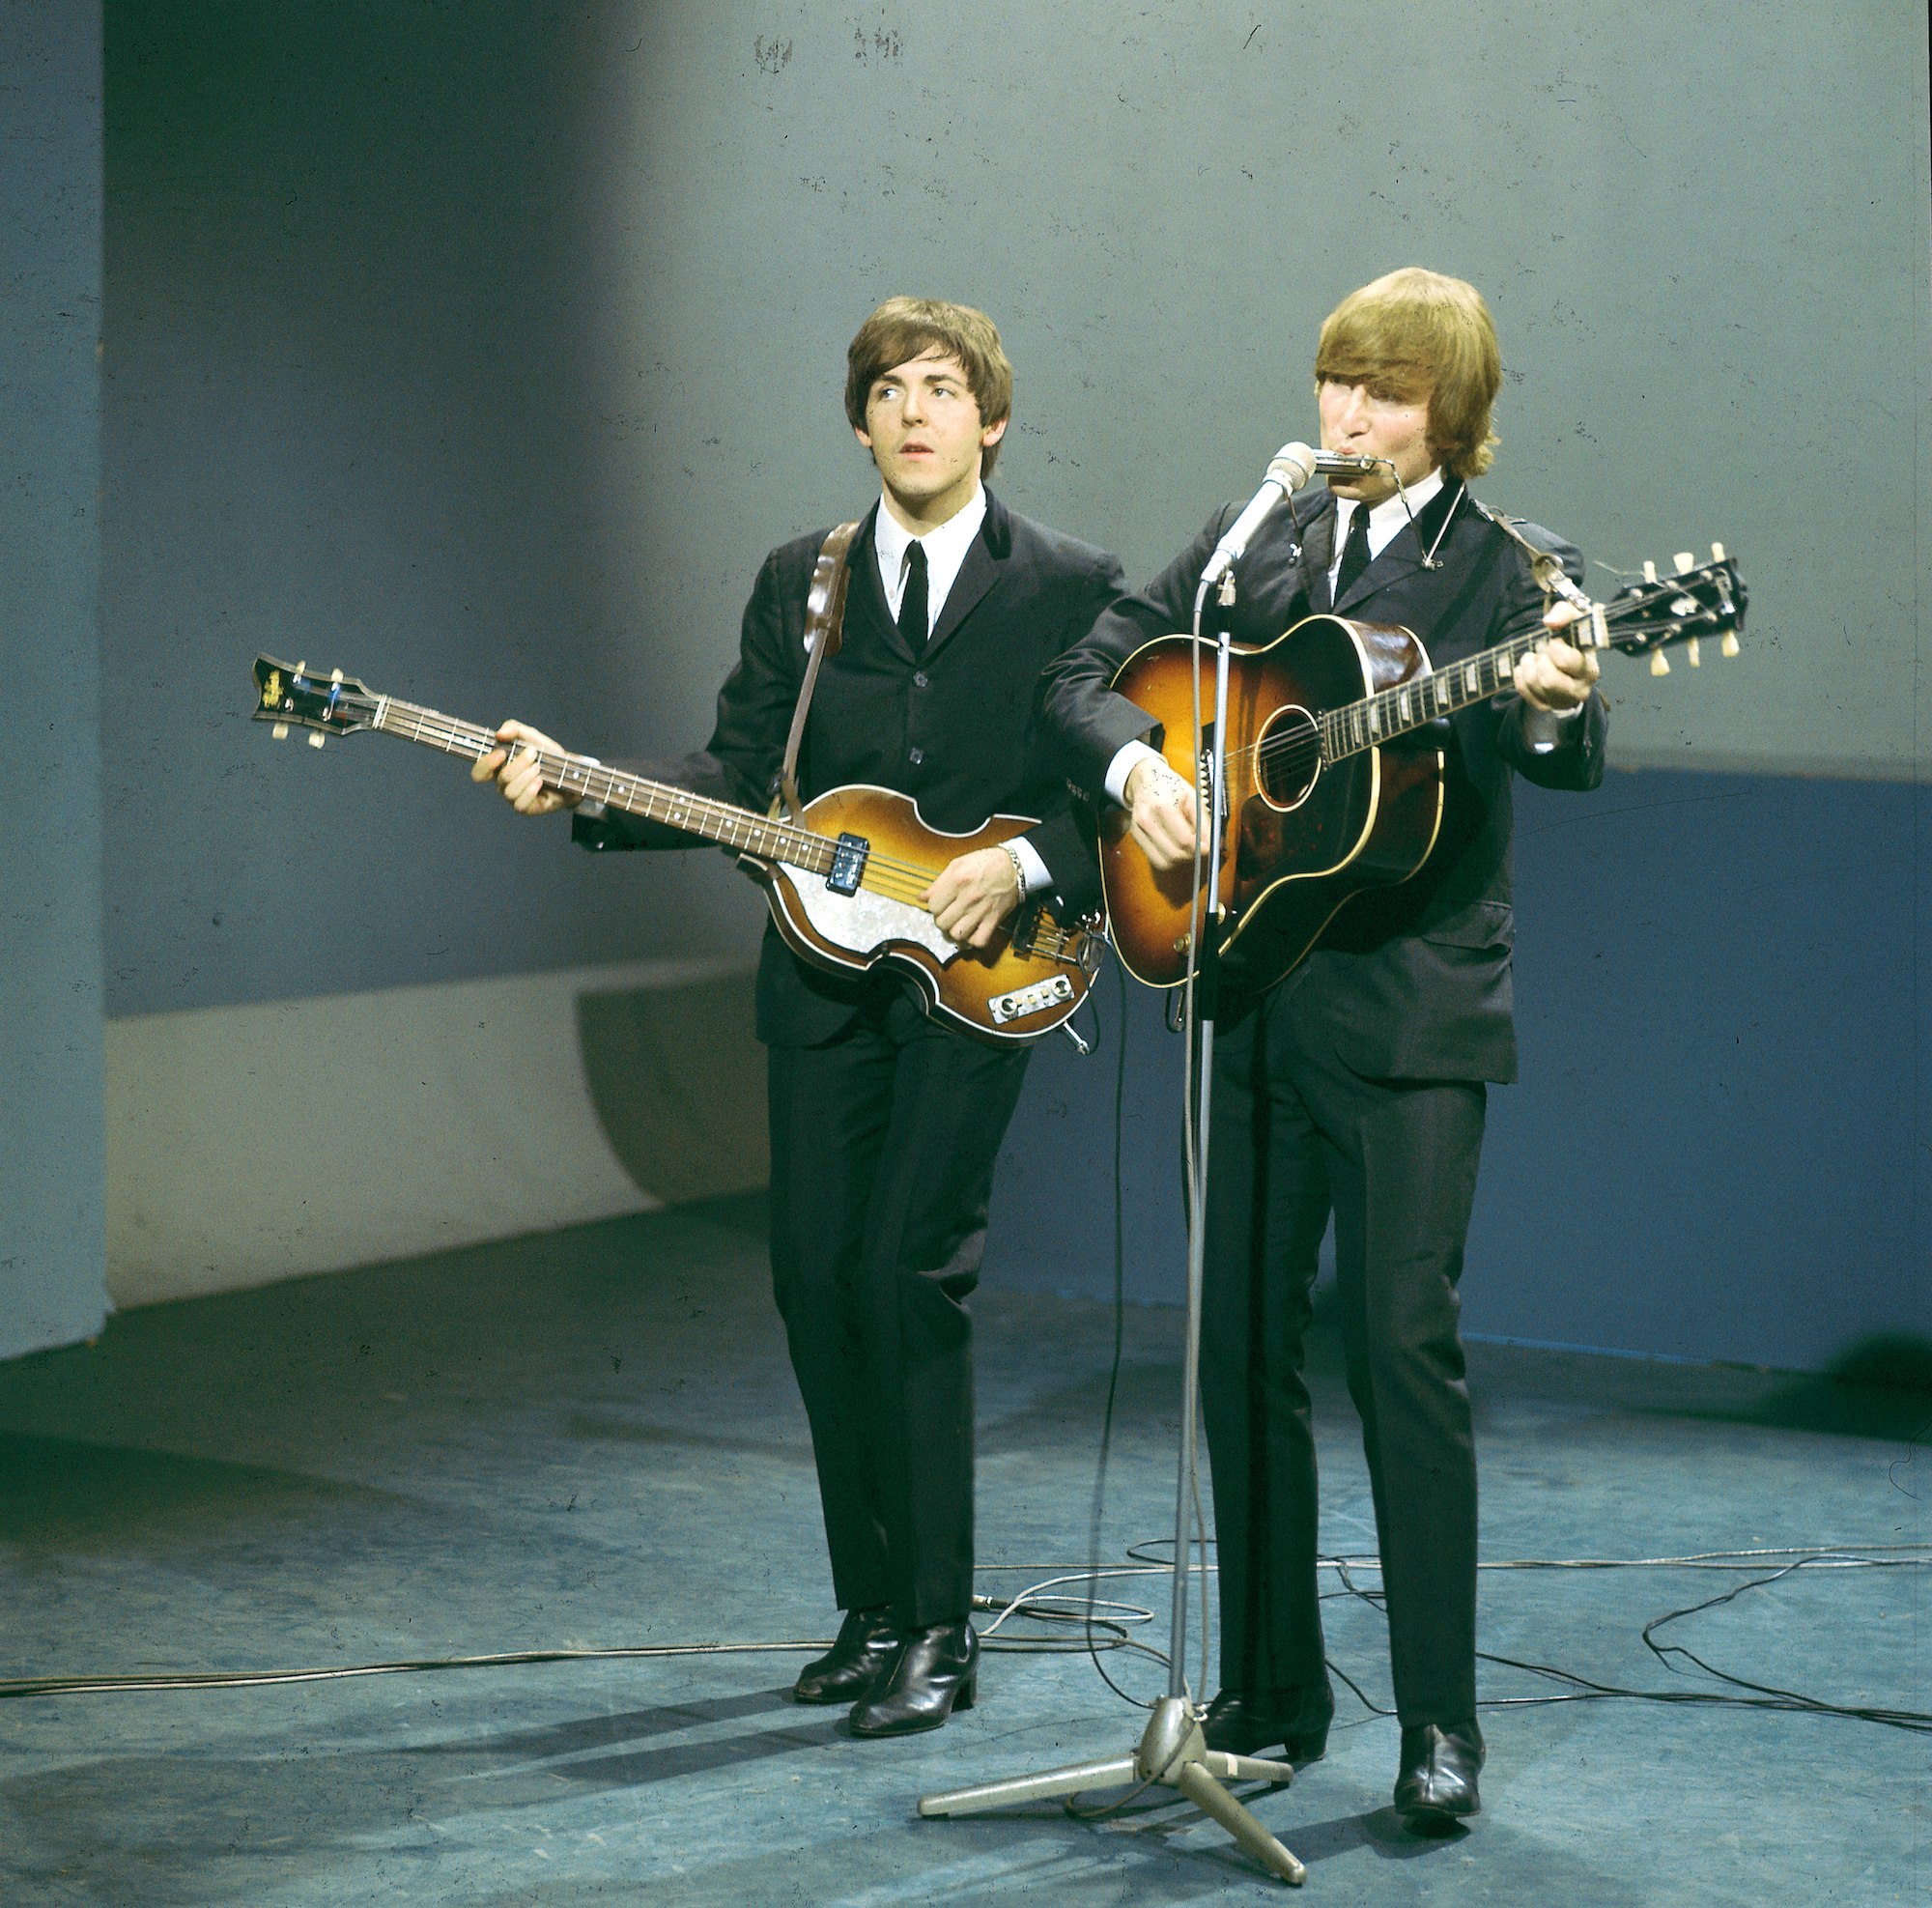 The Beatles' Paul McCartney and John Lennon play guitars together